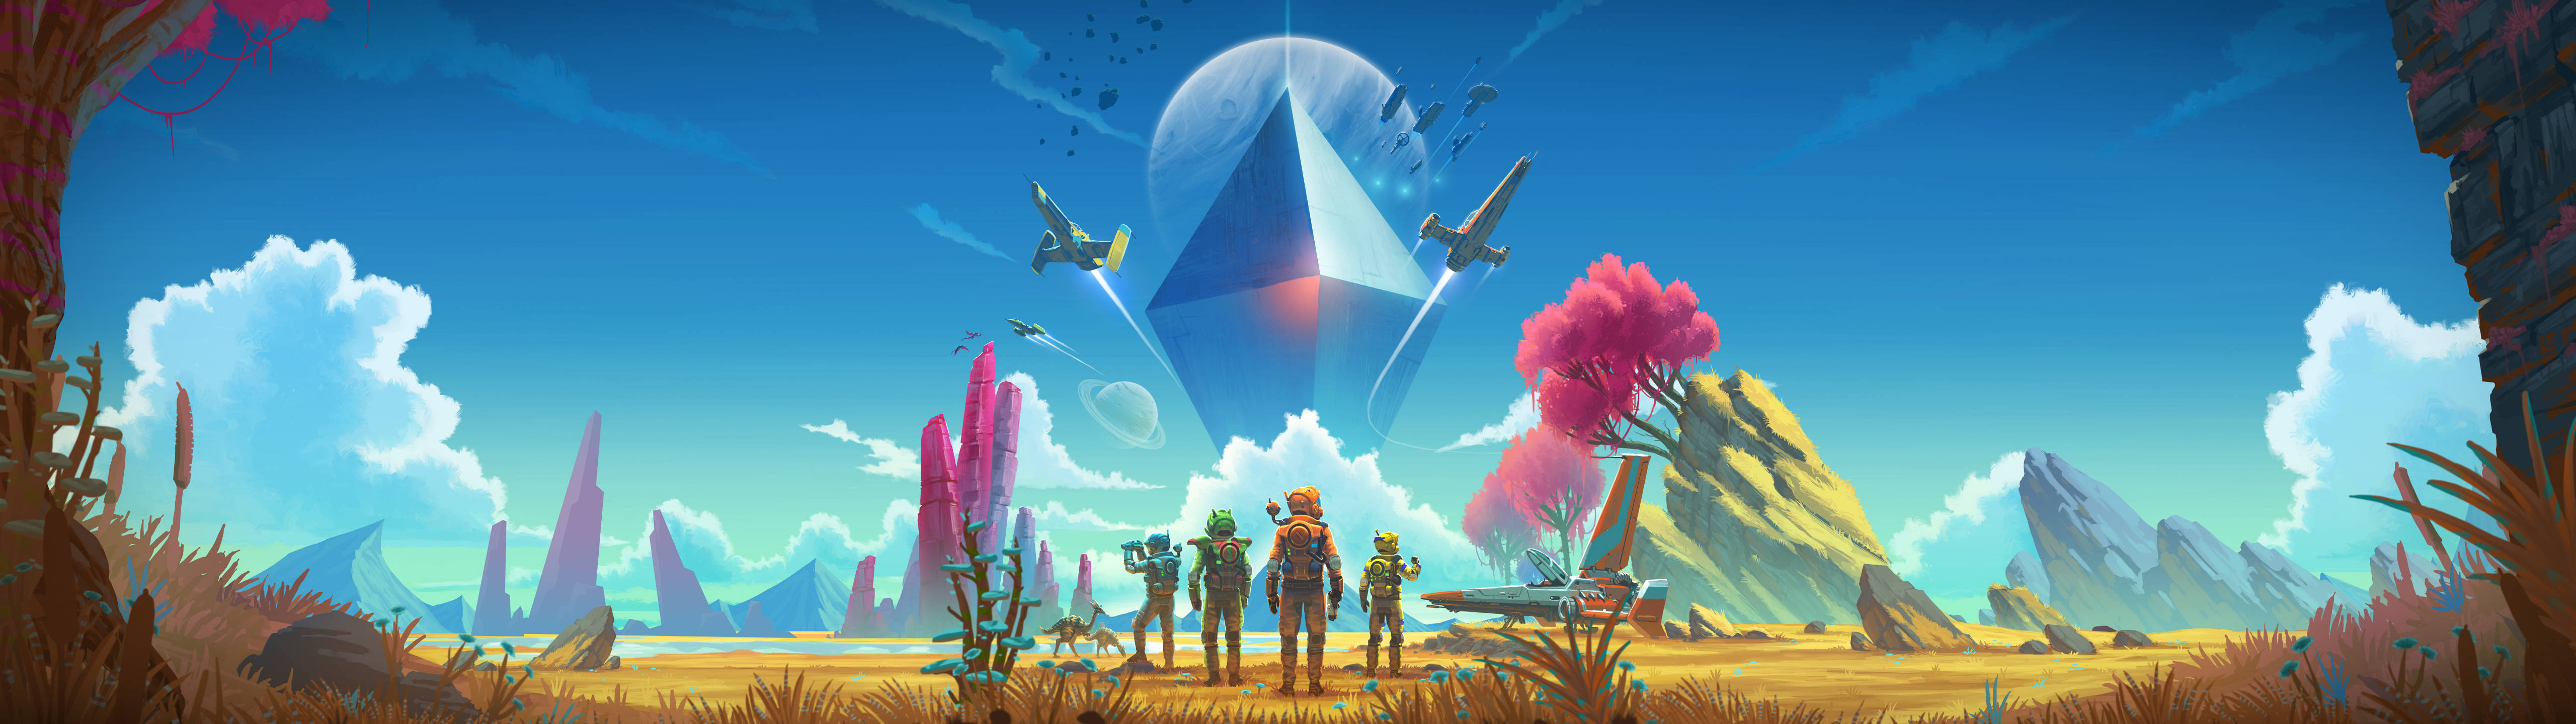 Majestic Universe Exploration - No Man's Sky Game Scene Wallpaper